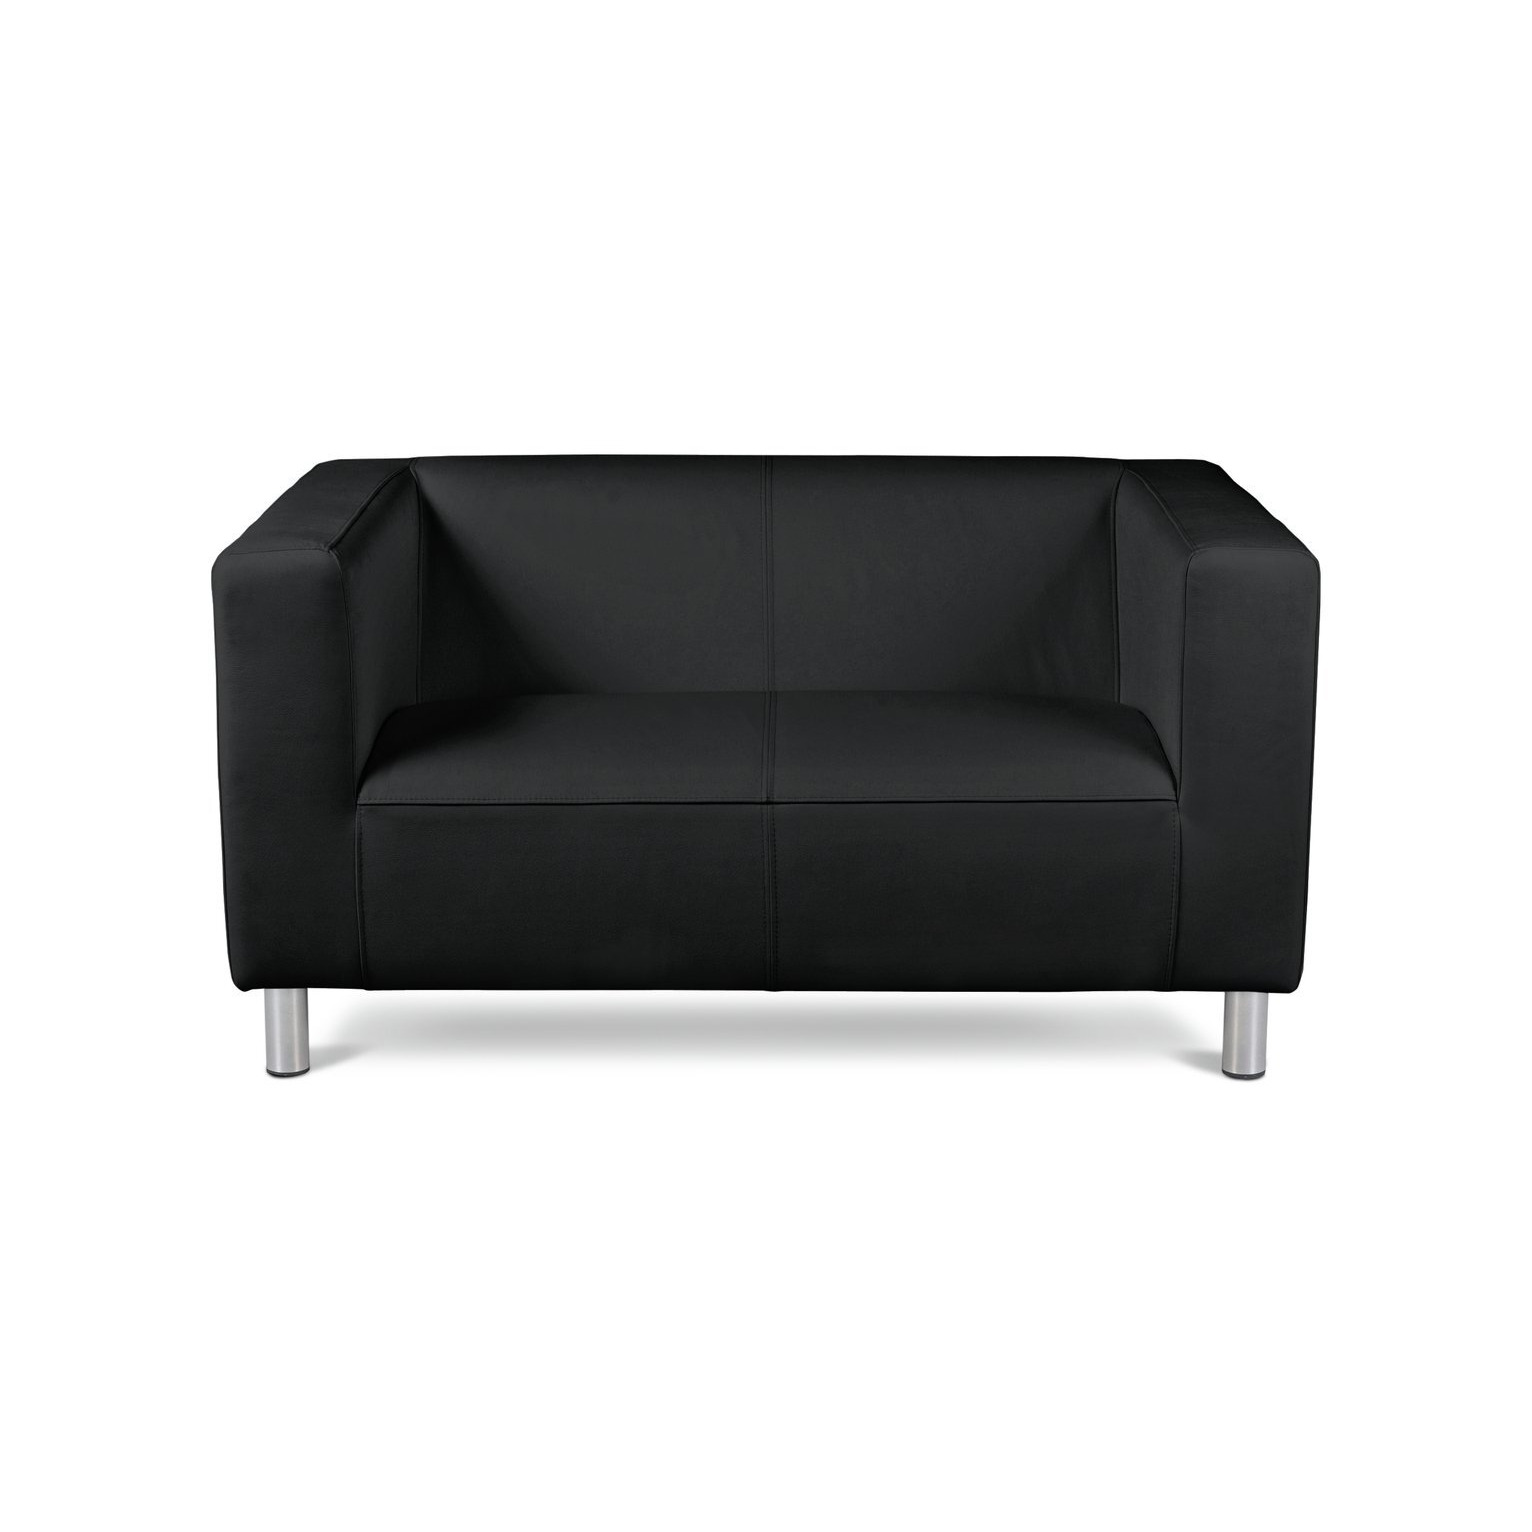 Argos Home Moda Small Faux Leather 2 Seater Sofa - Black - image 1